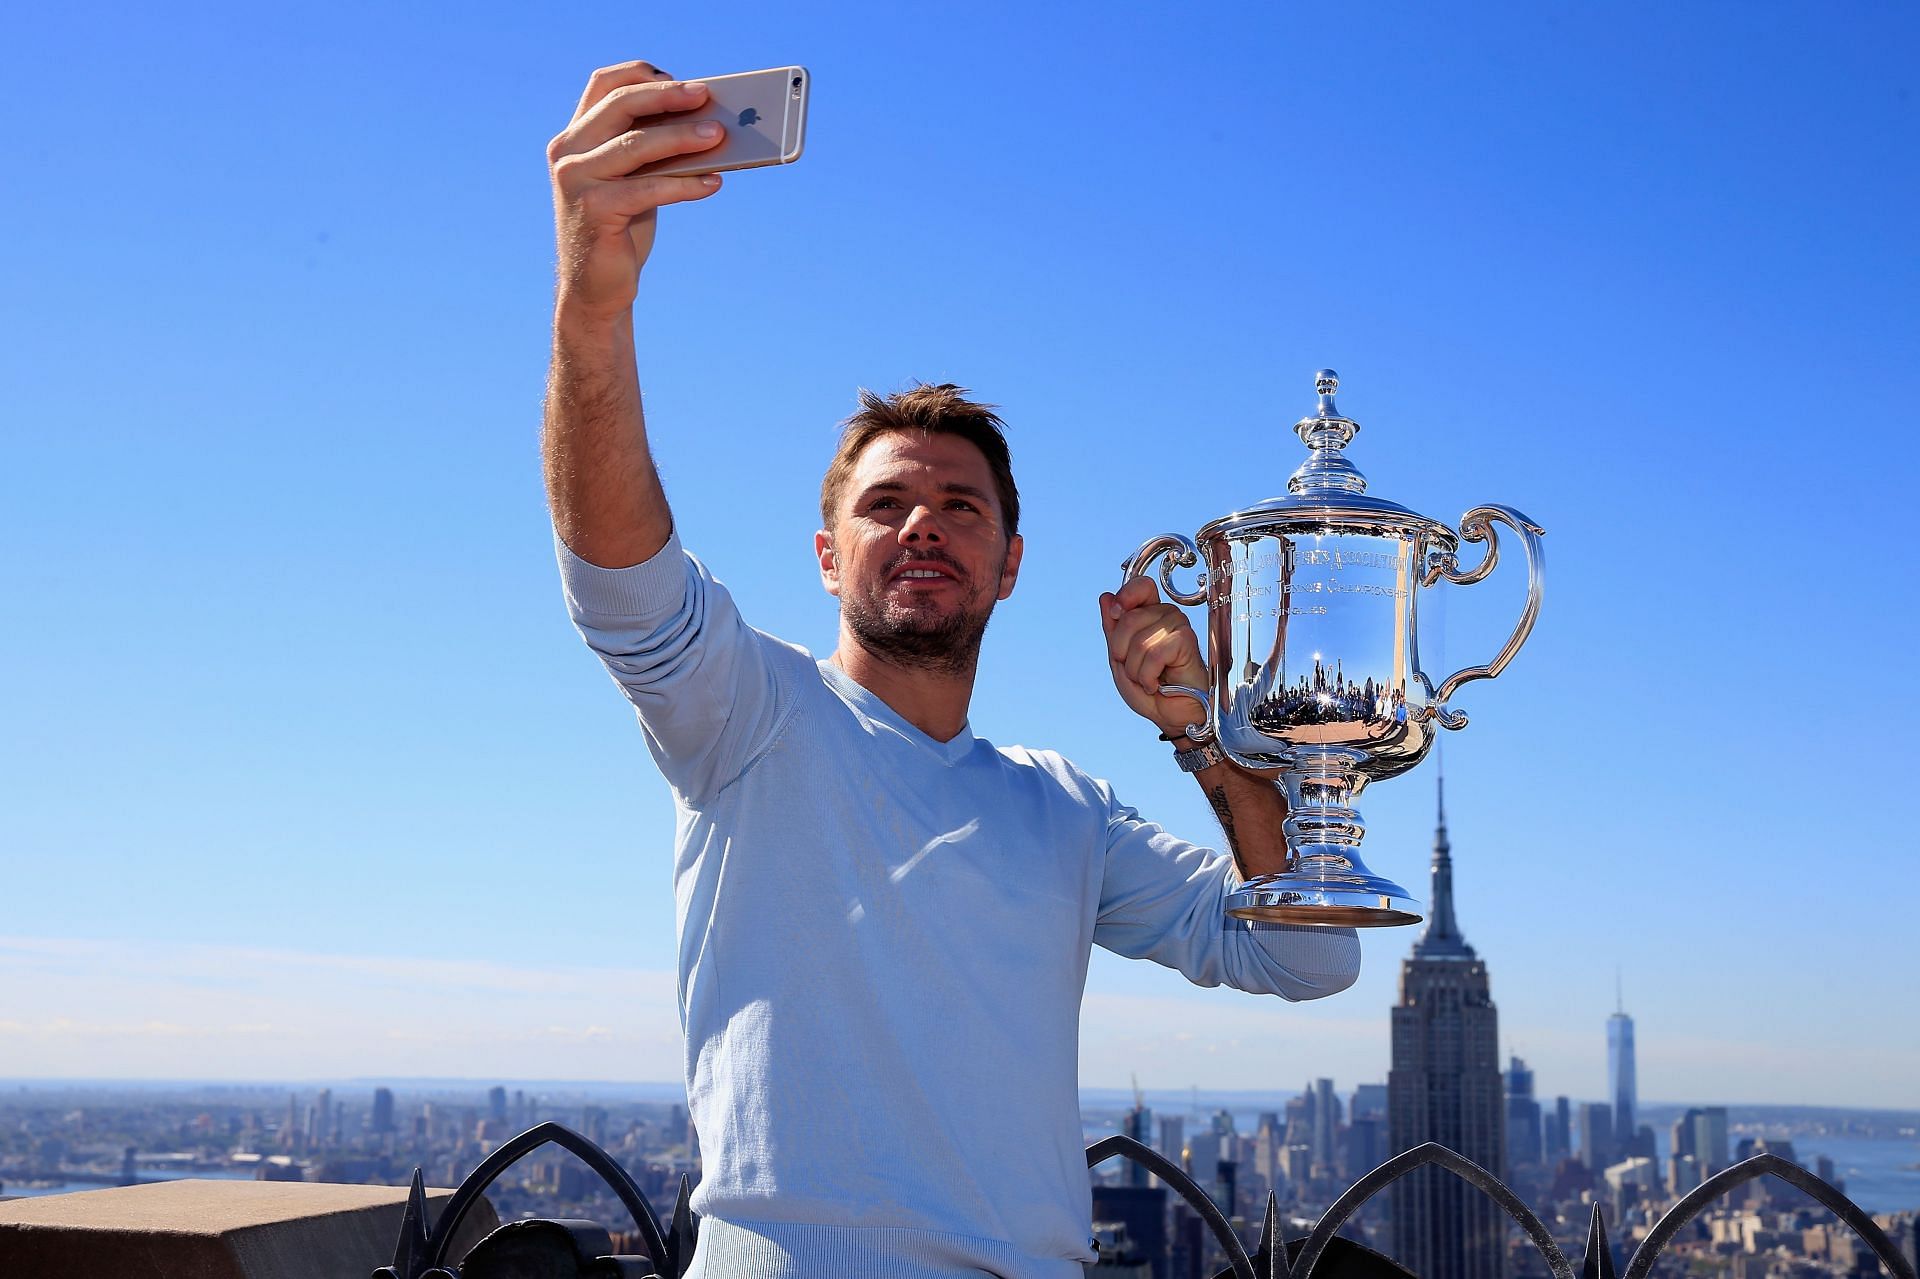 2016 US Open Champion Stan Wawrinka New York City Trophy Tour